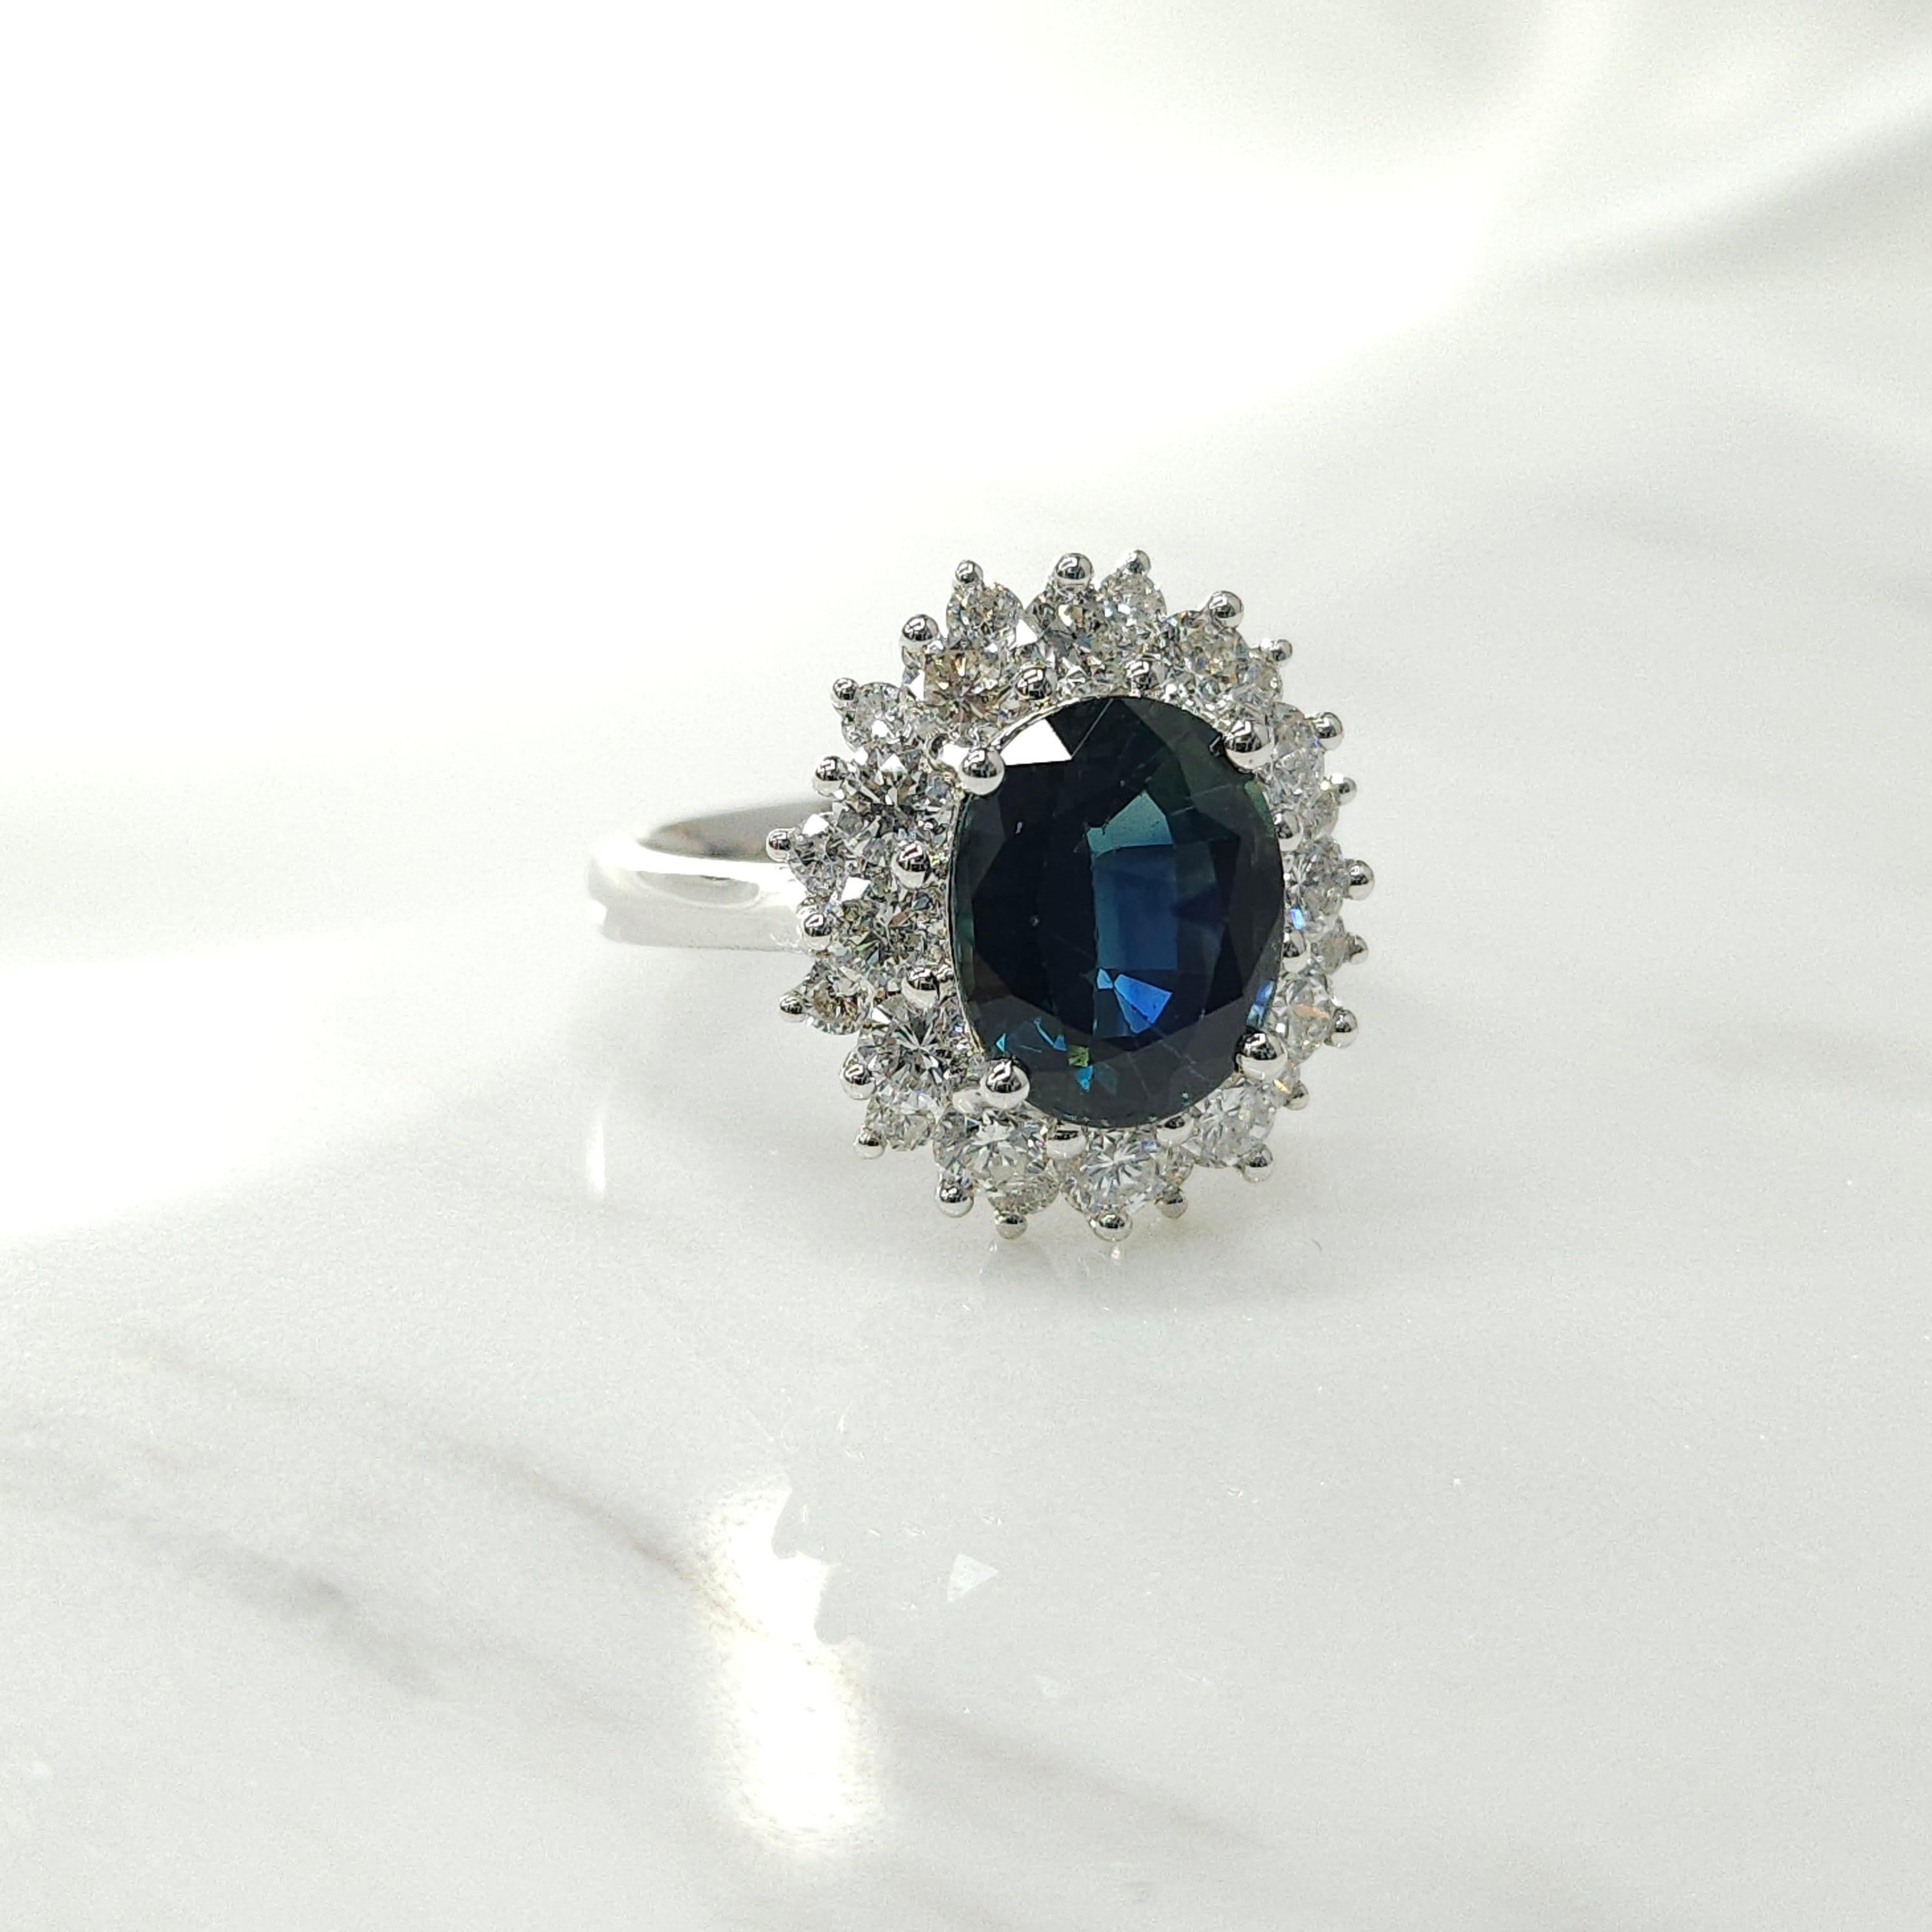 IGI Certified 3.37 Carat No Heat Blue Sapphire & Diamond Ring in 18K White Gold For Sale 2